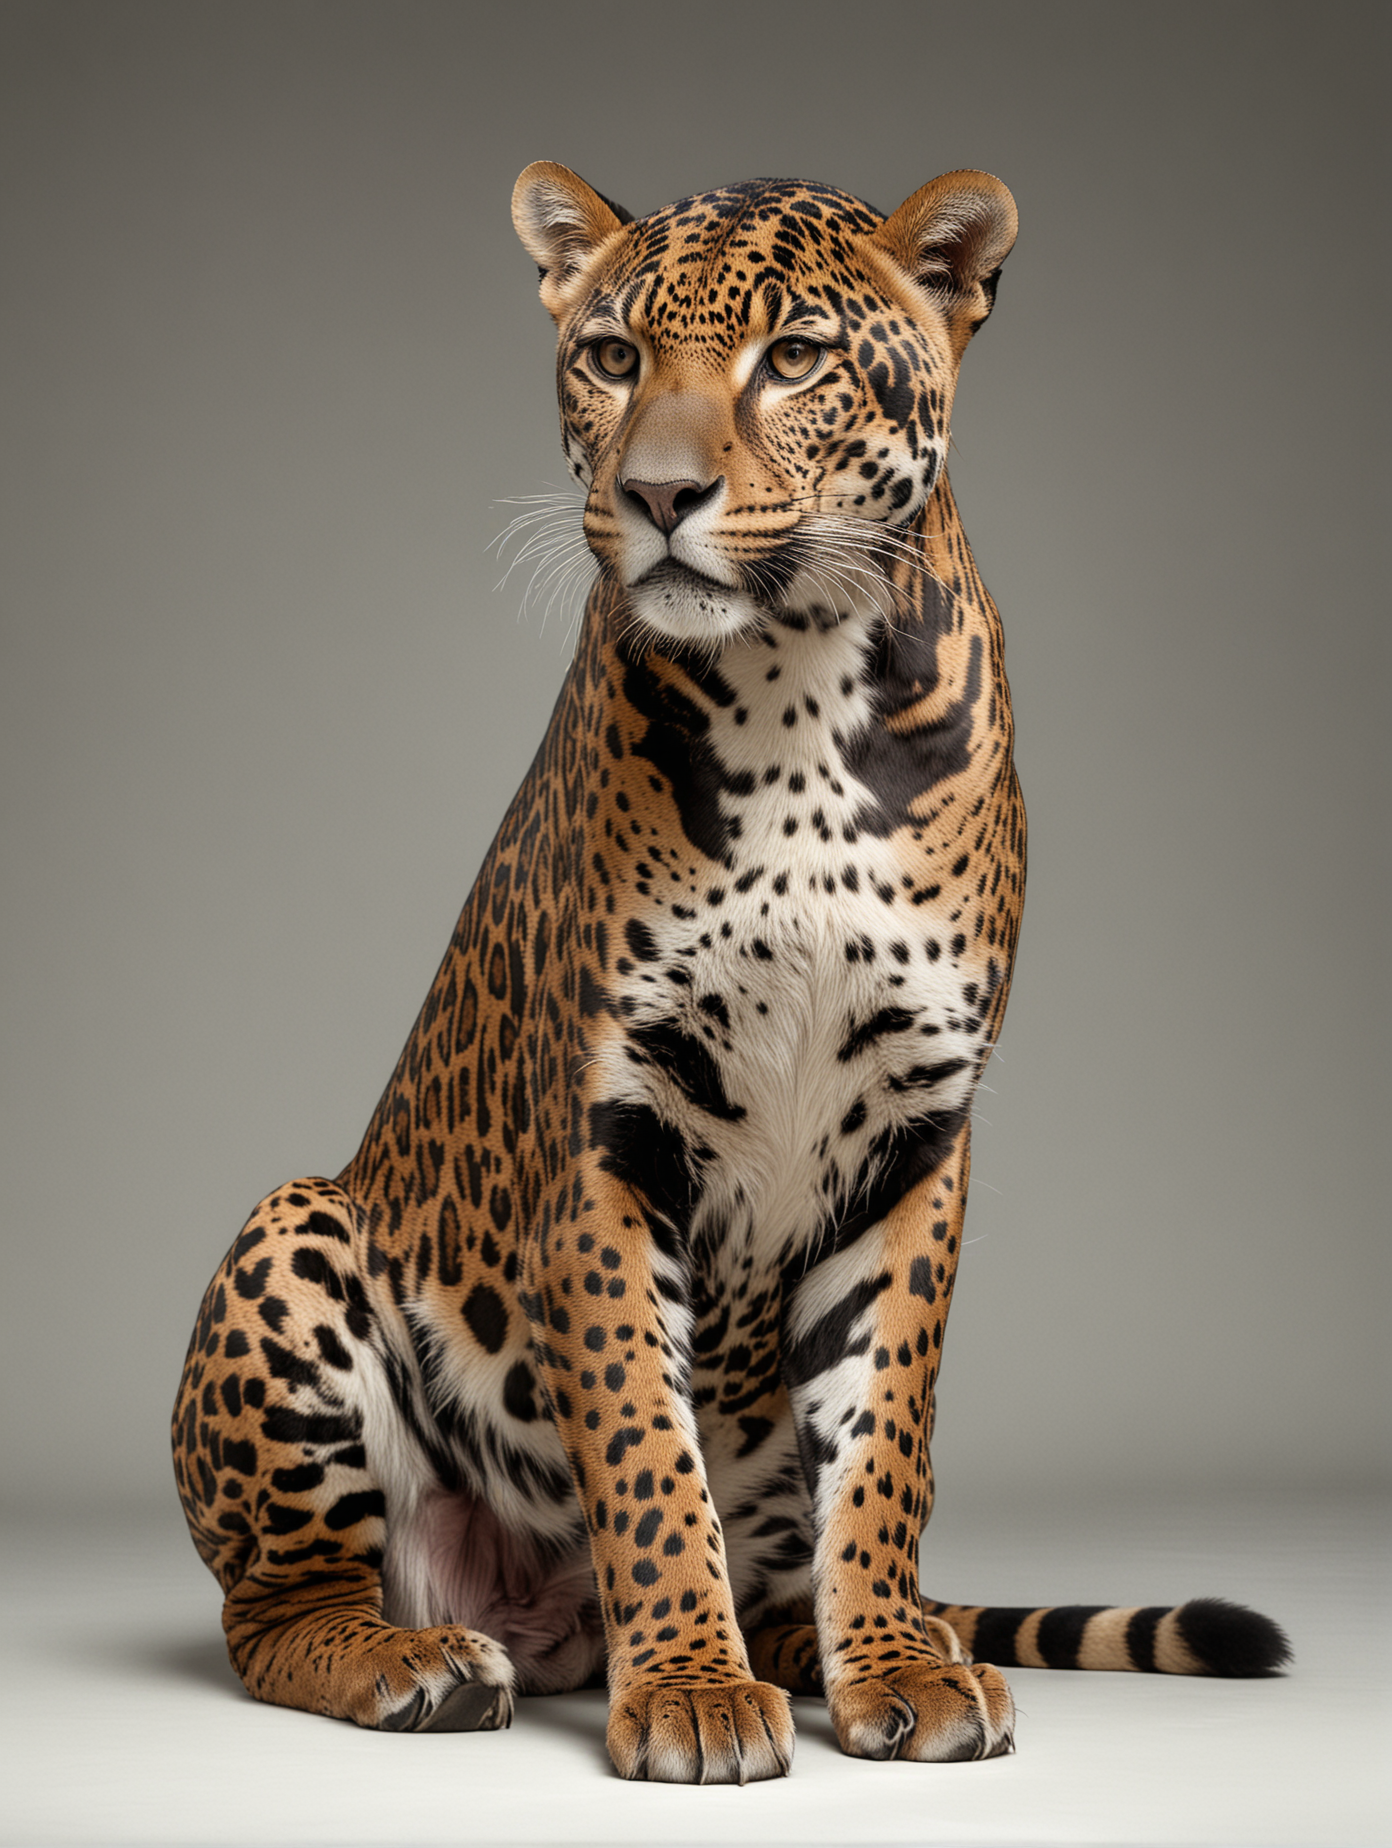 full body studio photo of jaguar sitting, angled view.